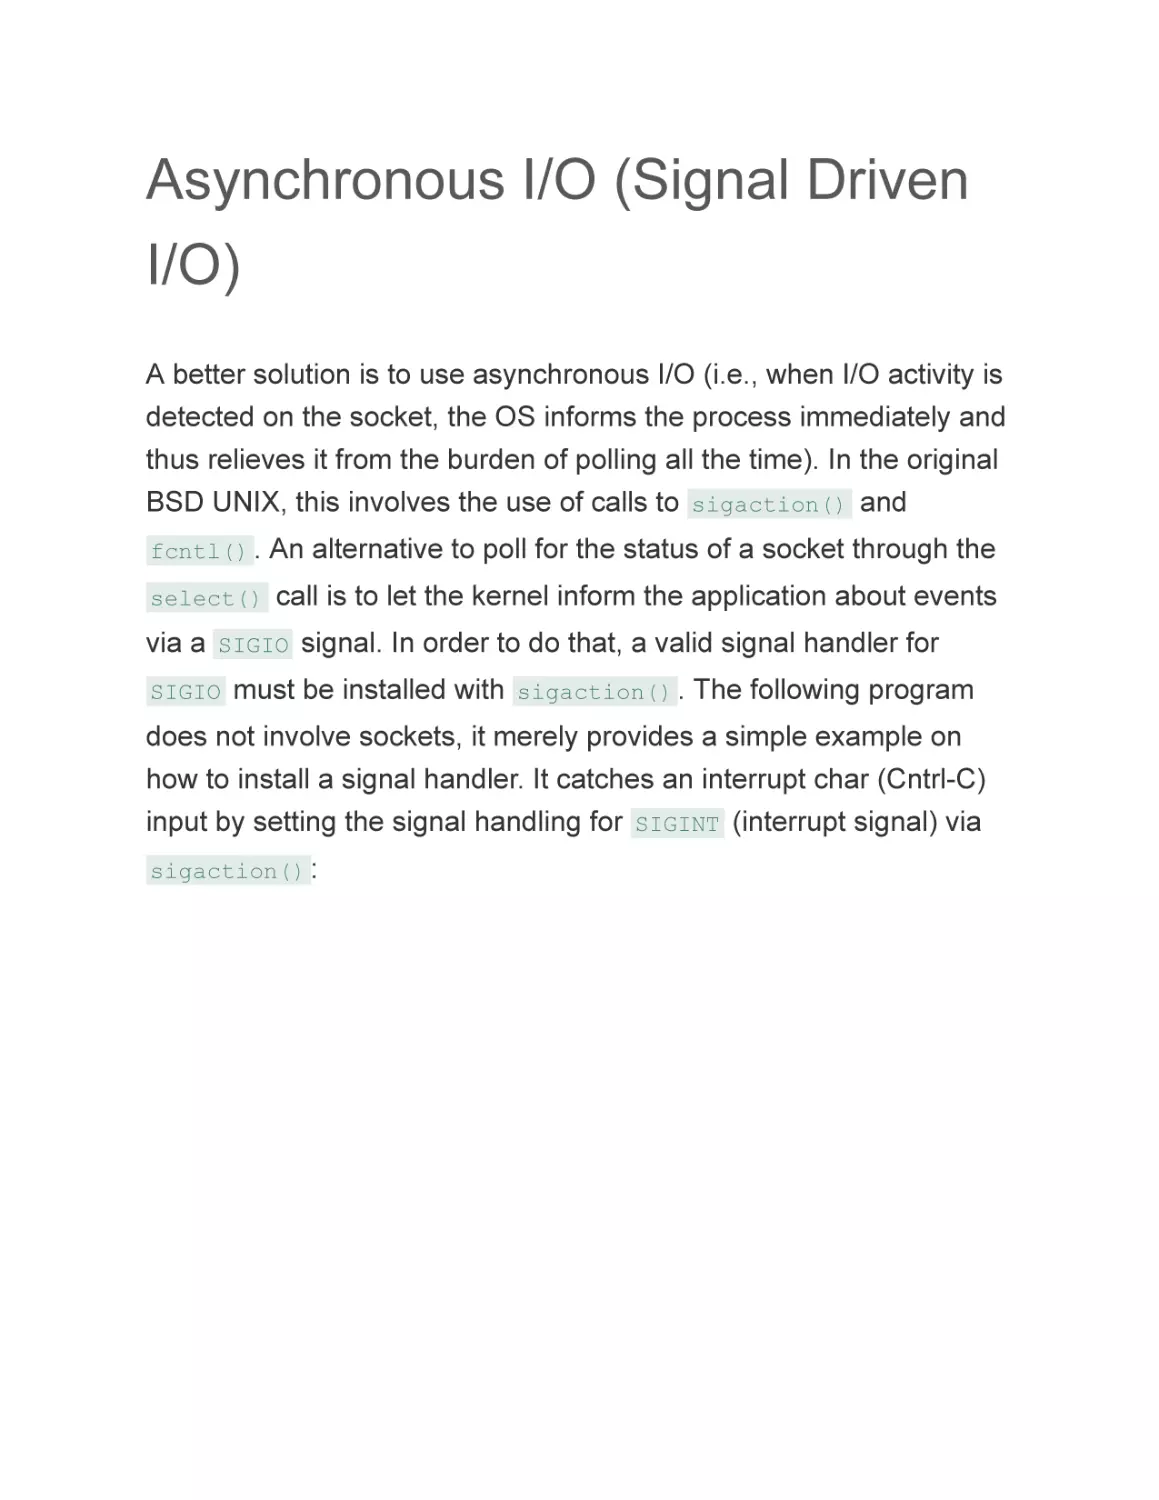 Asynchronous I/O (Signal Driven I/O)